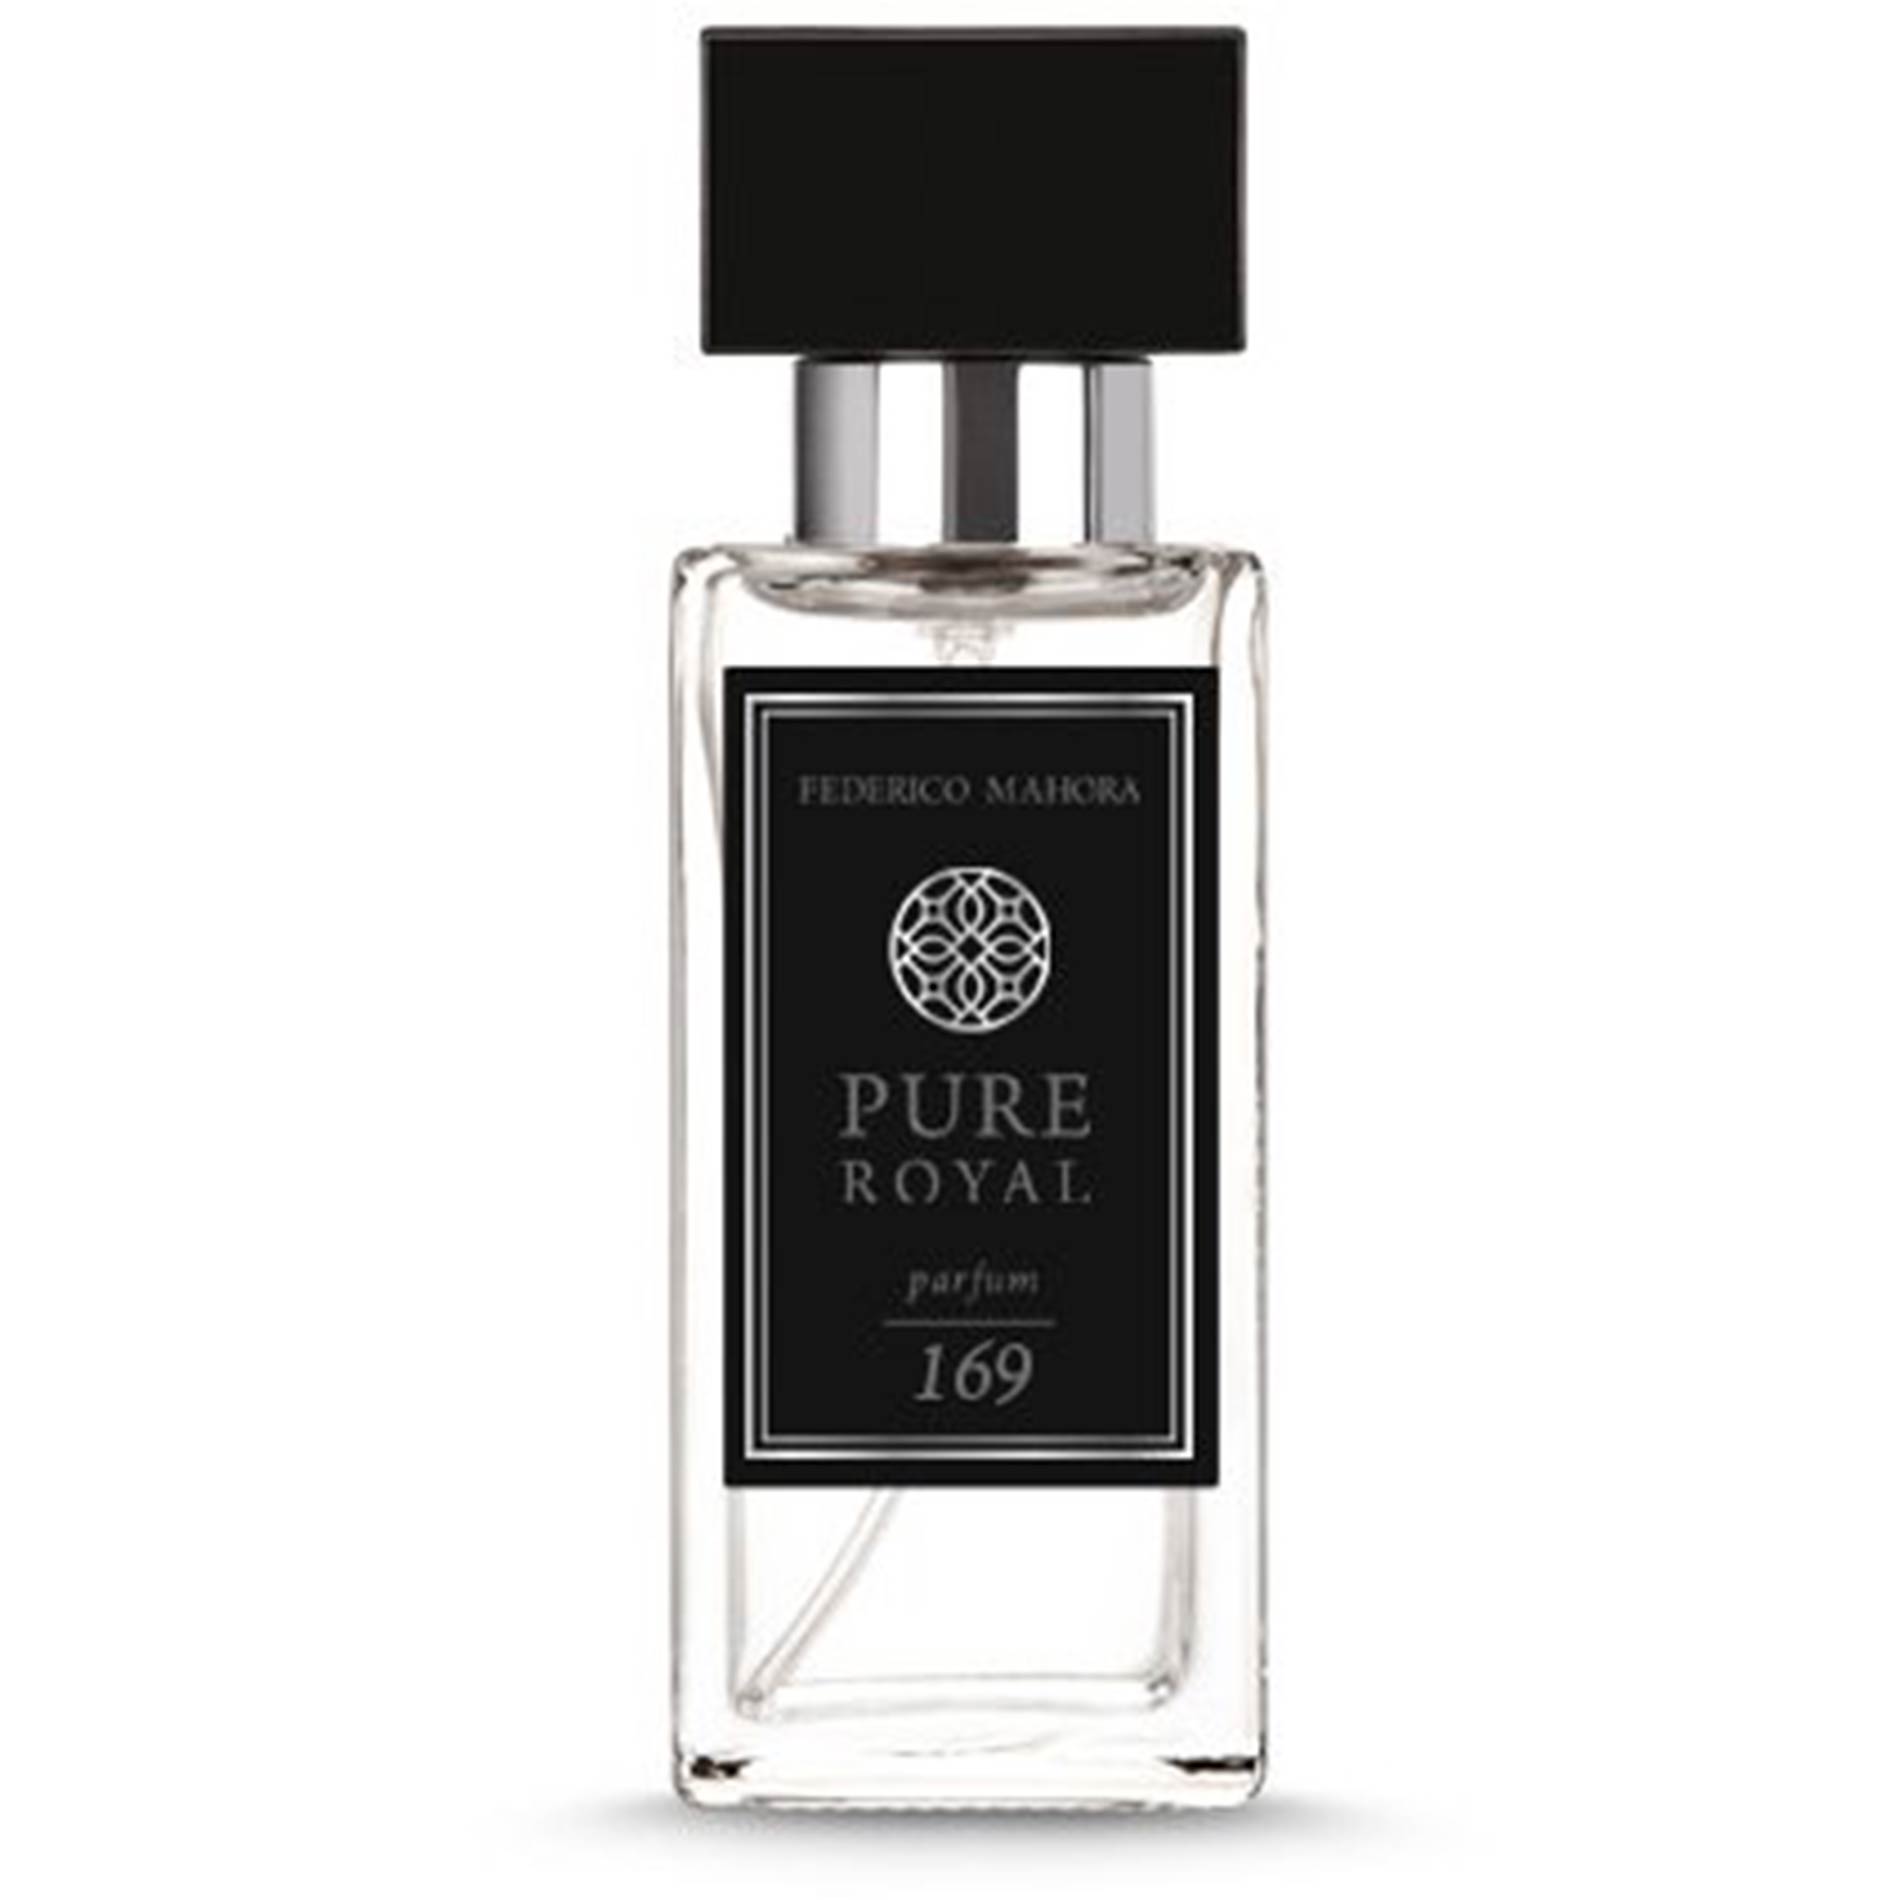 PURE ROYAL 169 Parfum by Federico Mahora